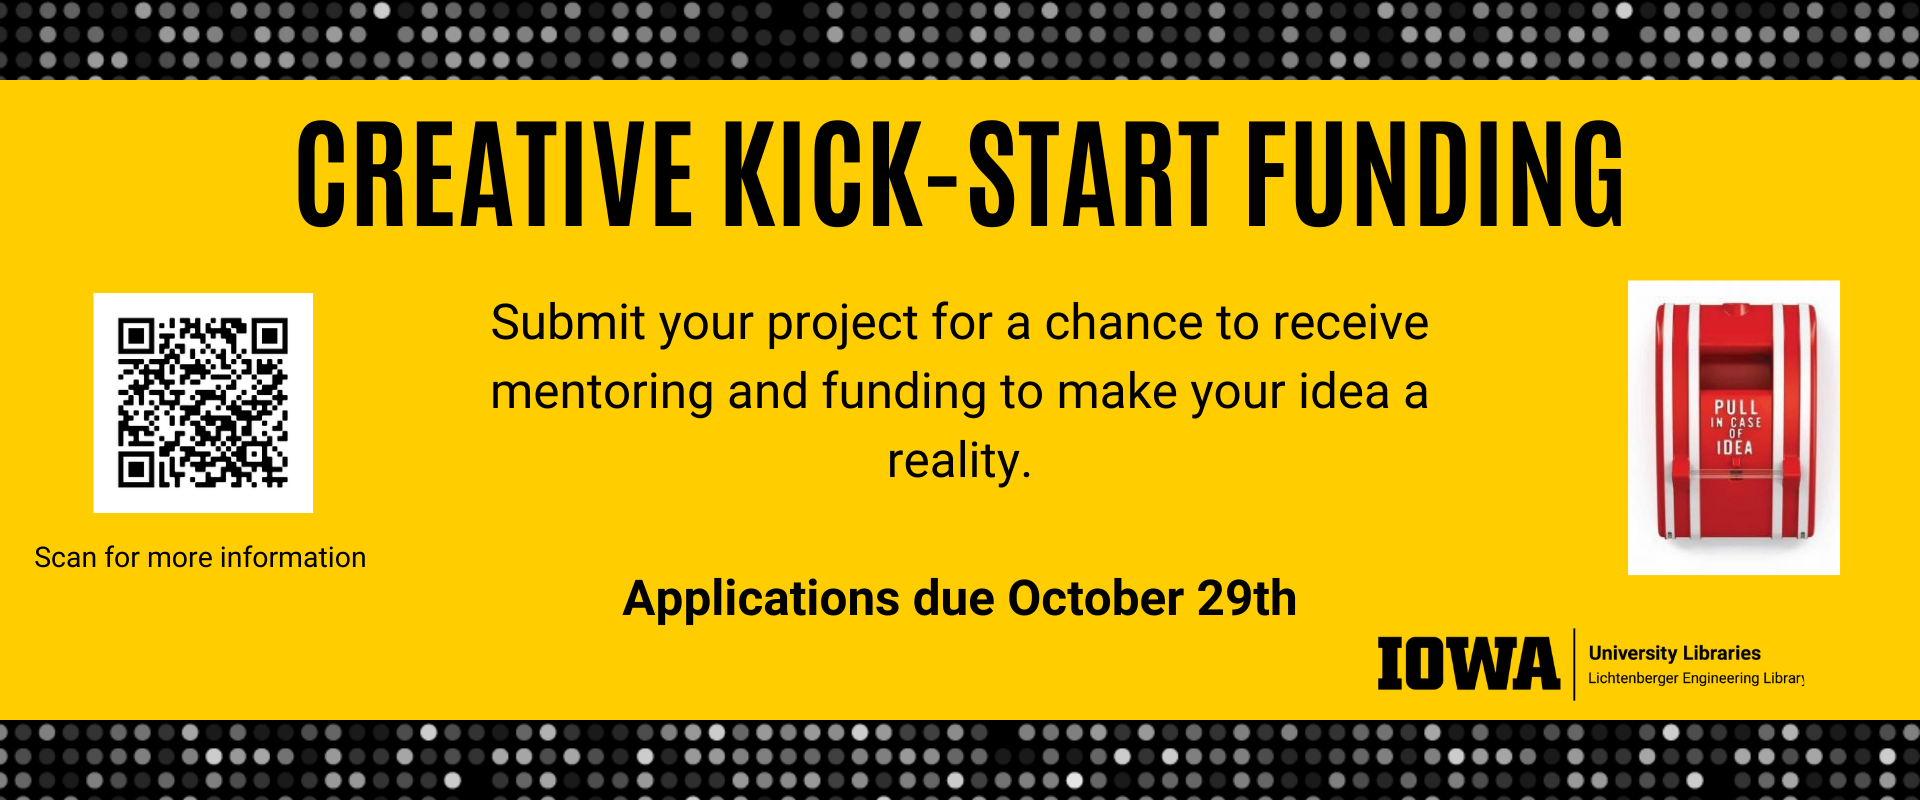 Creative kick-start funding applications due october 29